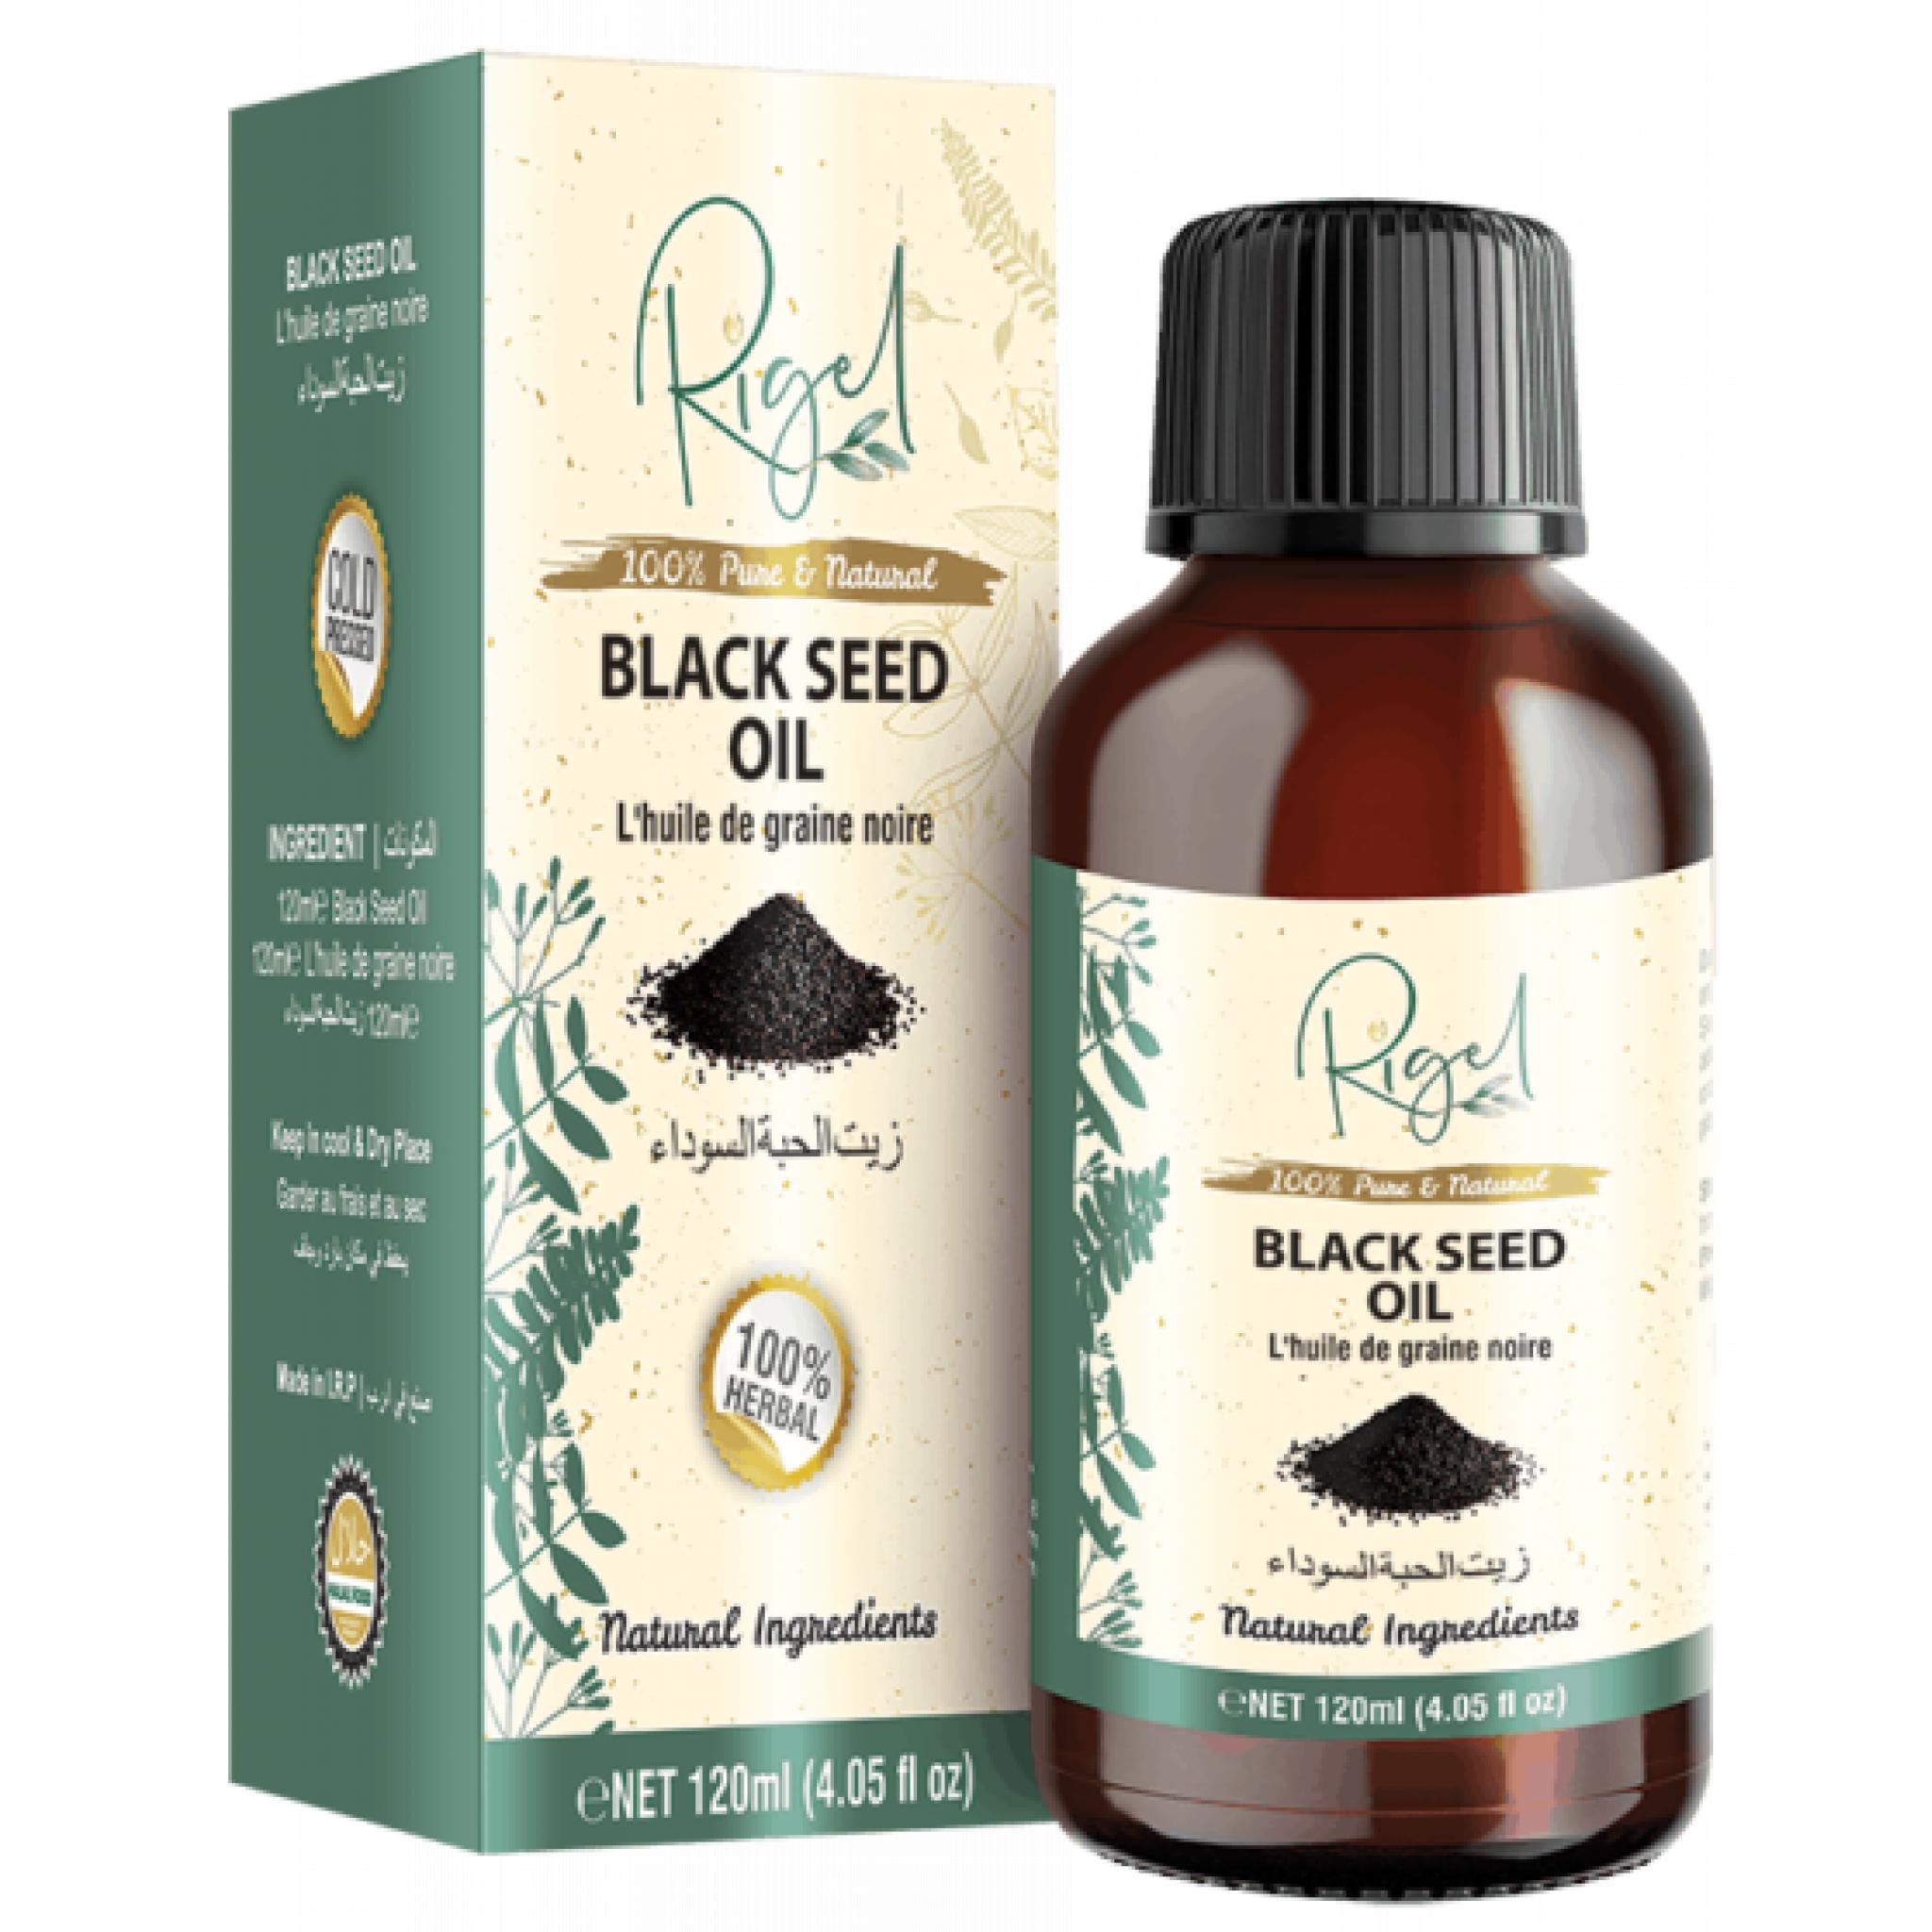 Rigel Black Seed Oil 120ml